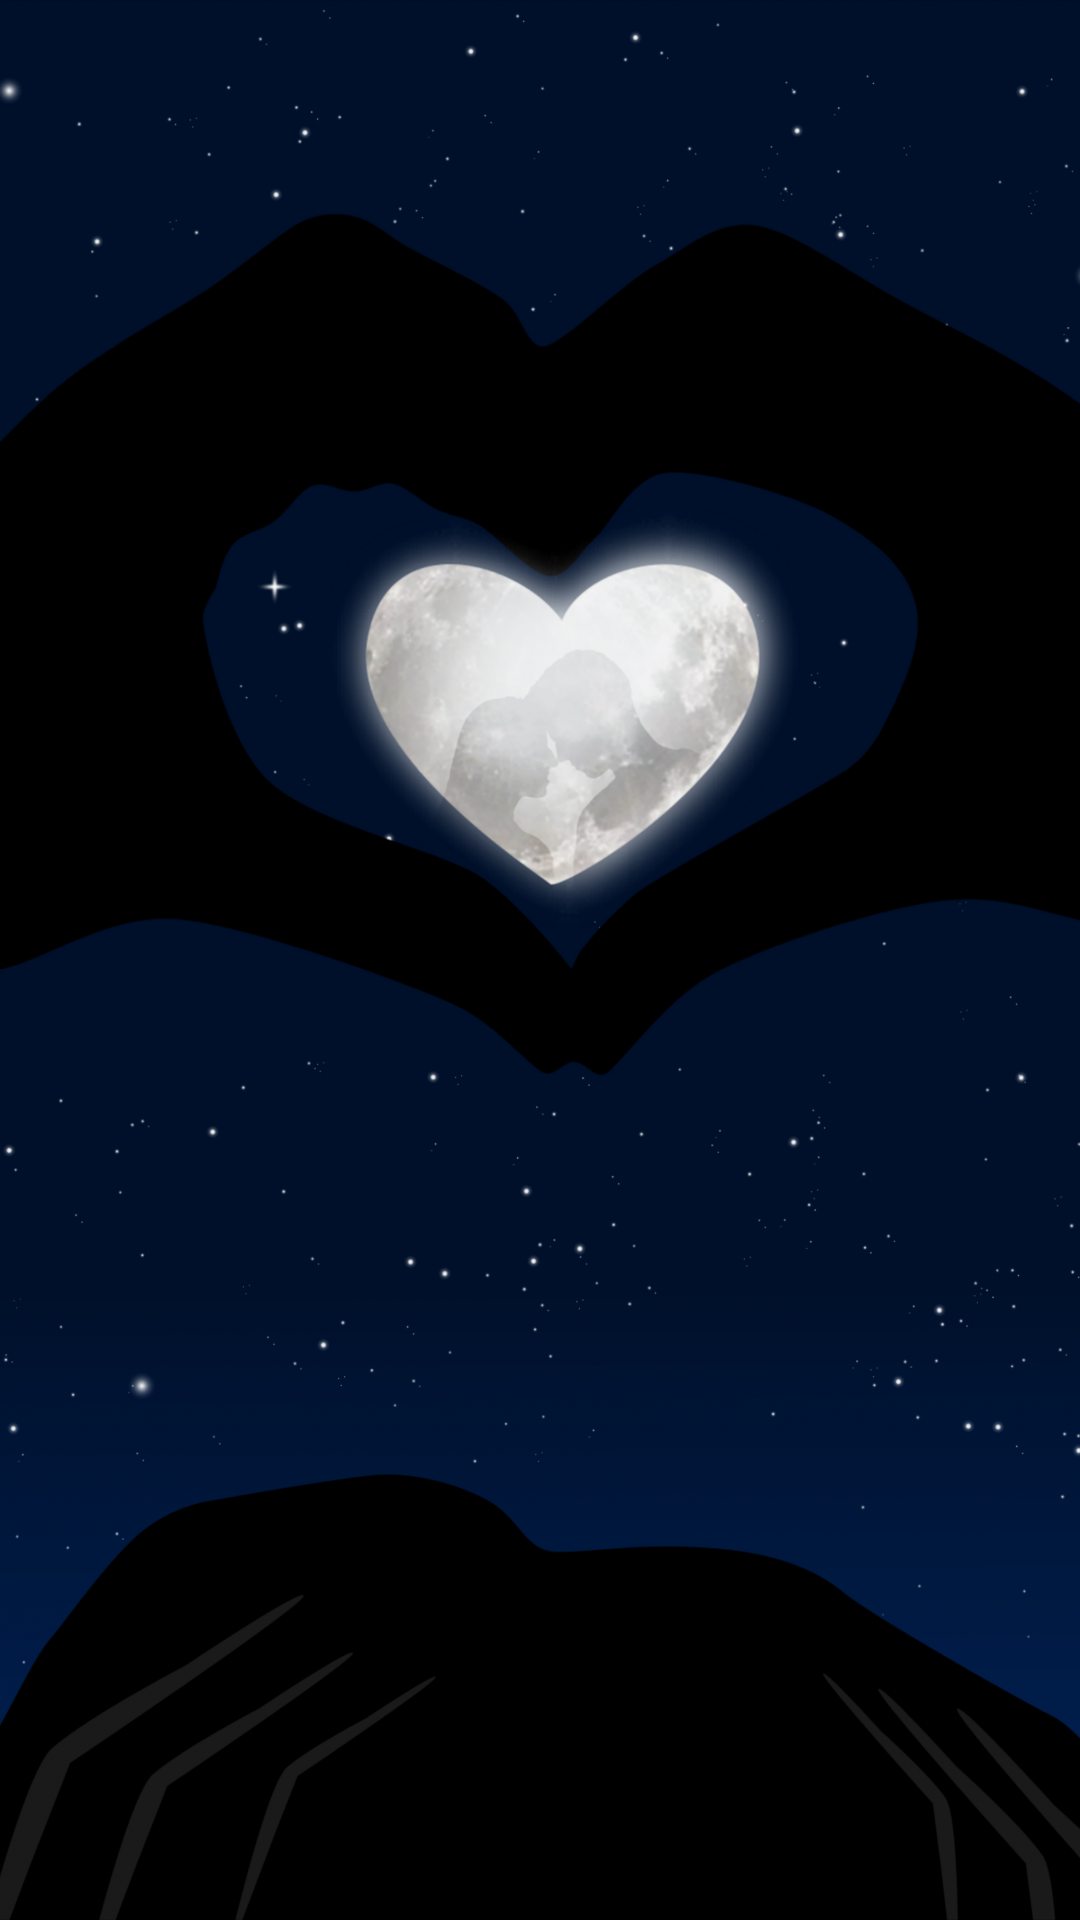 Heart Wallpaper 4K, Stars, Blue background, Hands together, Couple